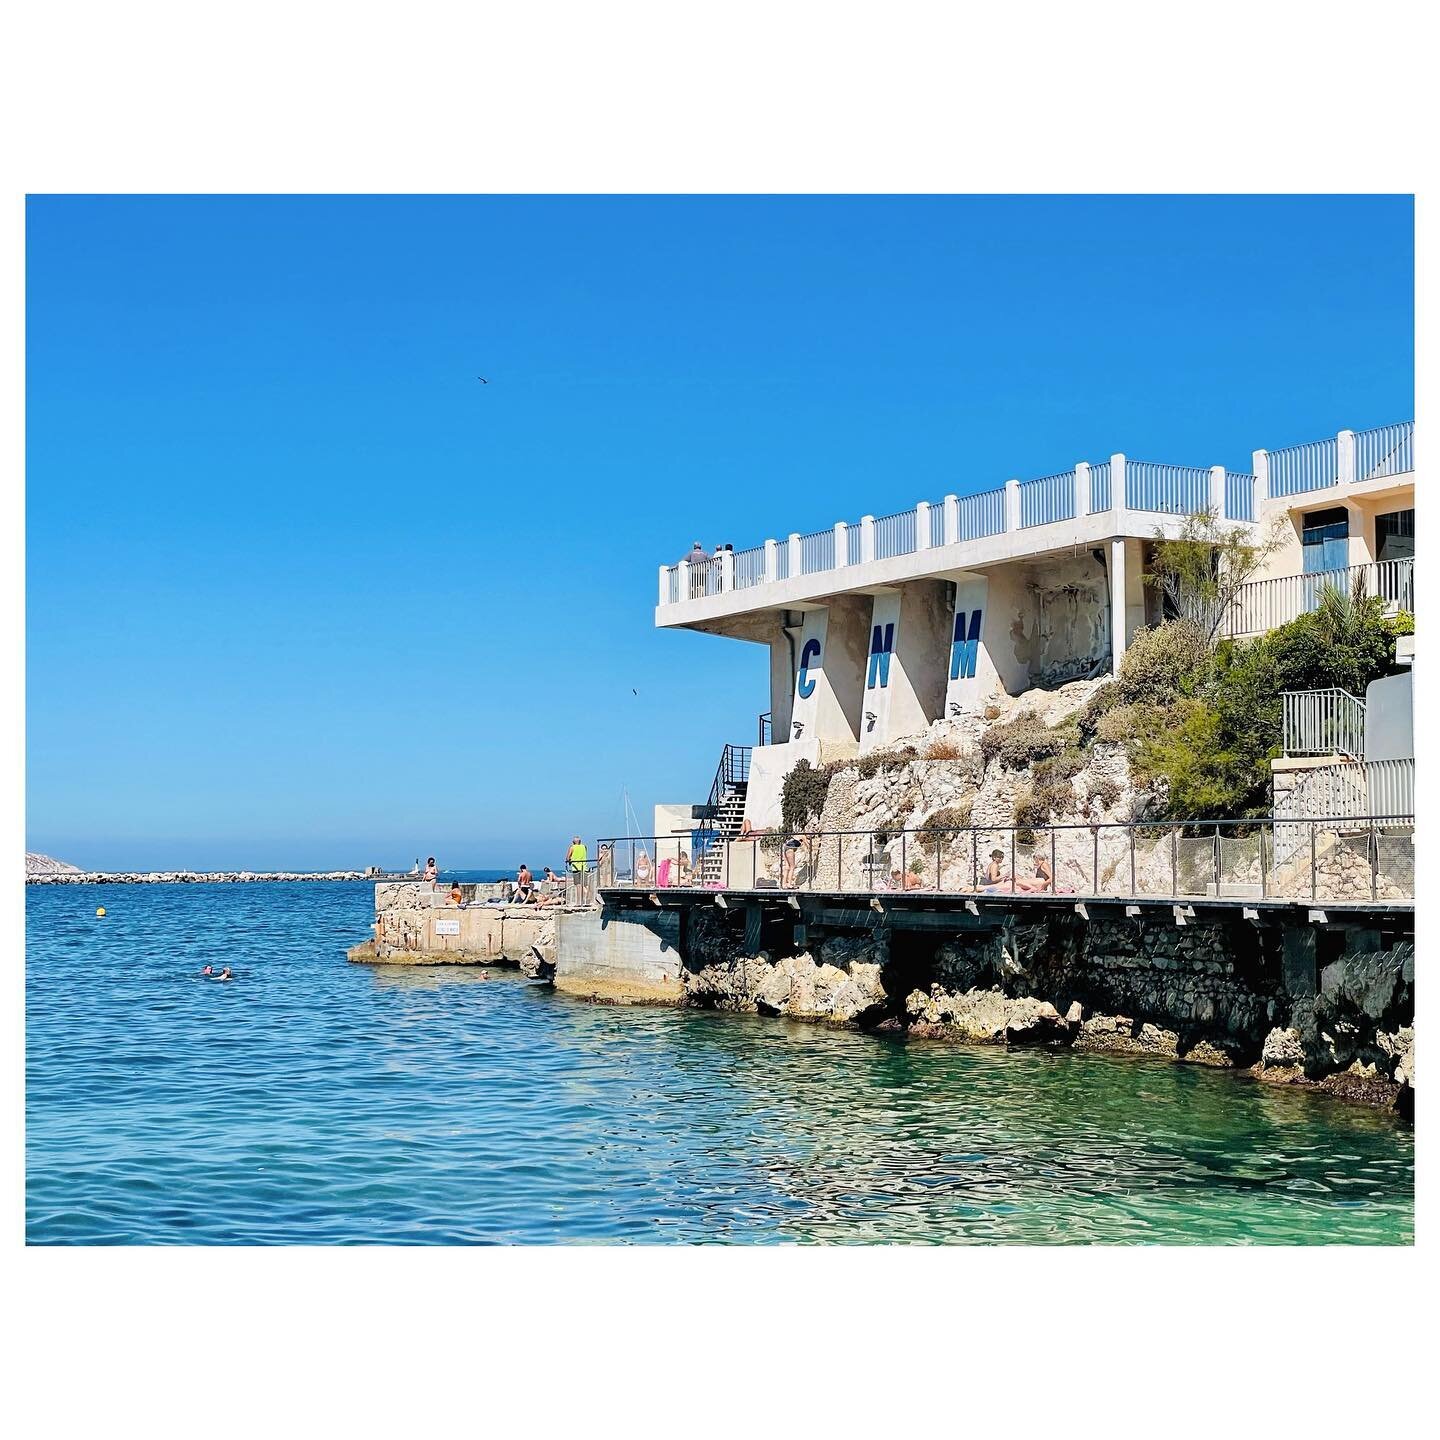 PROMONTOIRE ARCHITECTURAL
.
.
.
@cnmarseille #cnmarseille #promontoire #beton #promenade #swimming #sealife #summervibes #summerlife #staircase #shadesofblue #shadesofmagic #mediterraneansea #mediterraneanlife #seaview #mediterranean #swimmingtime  #